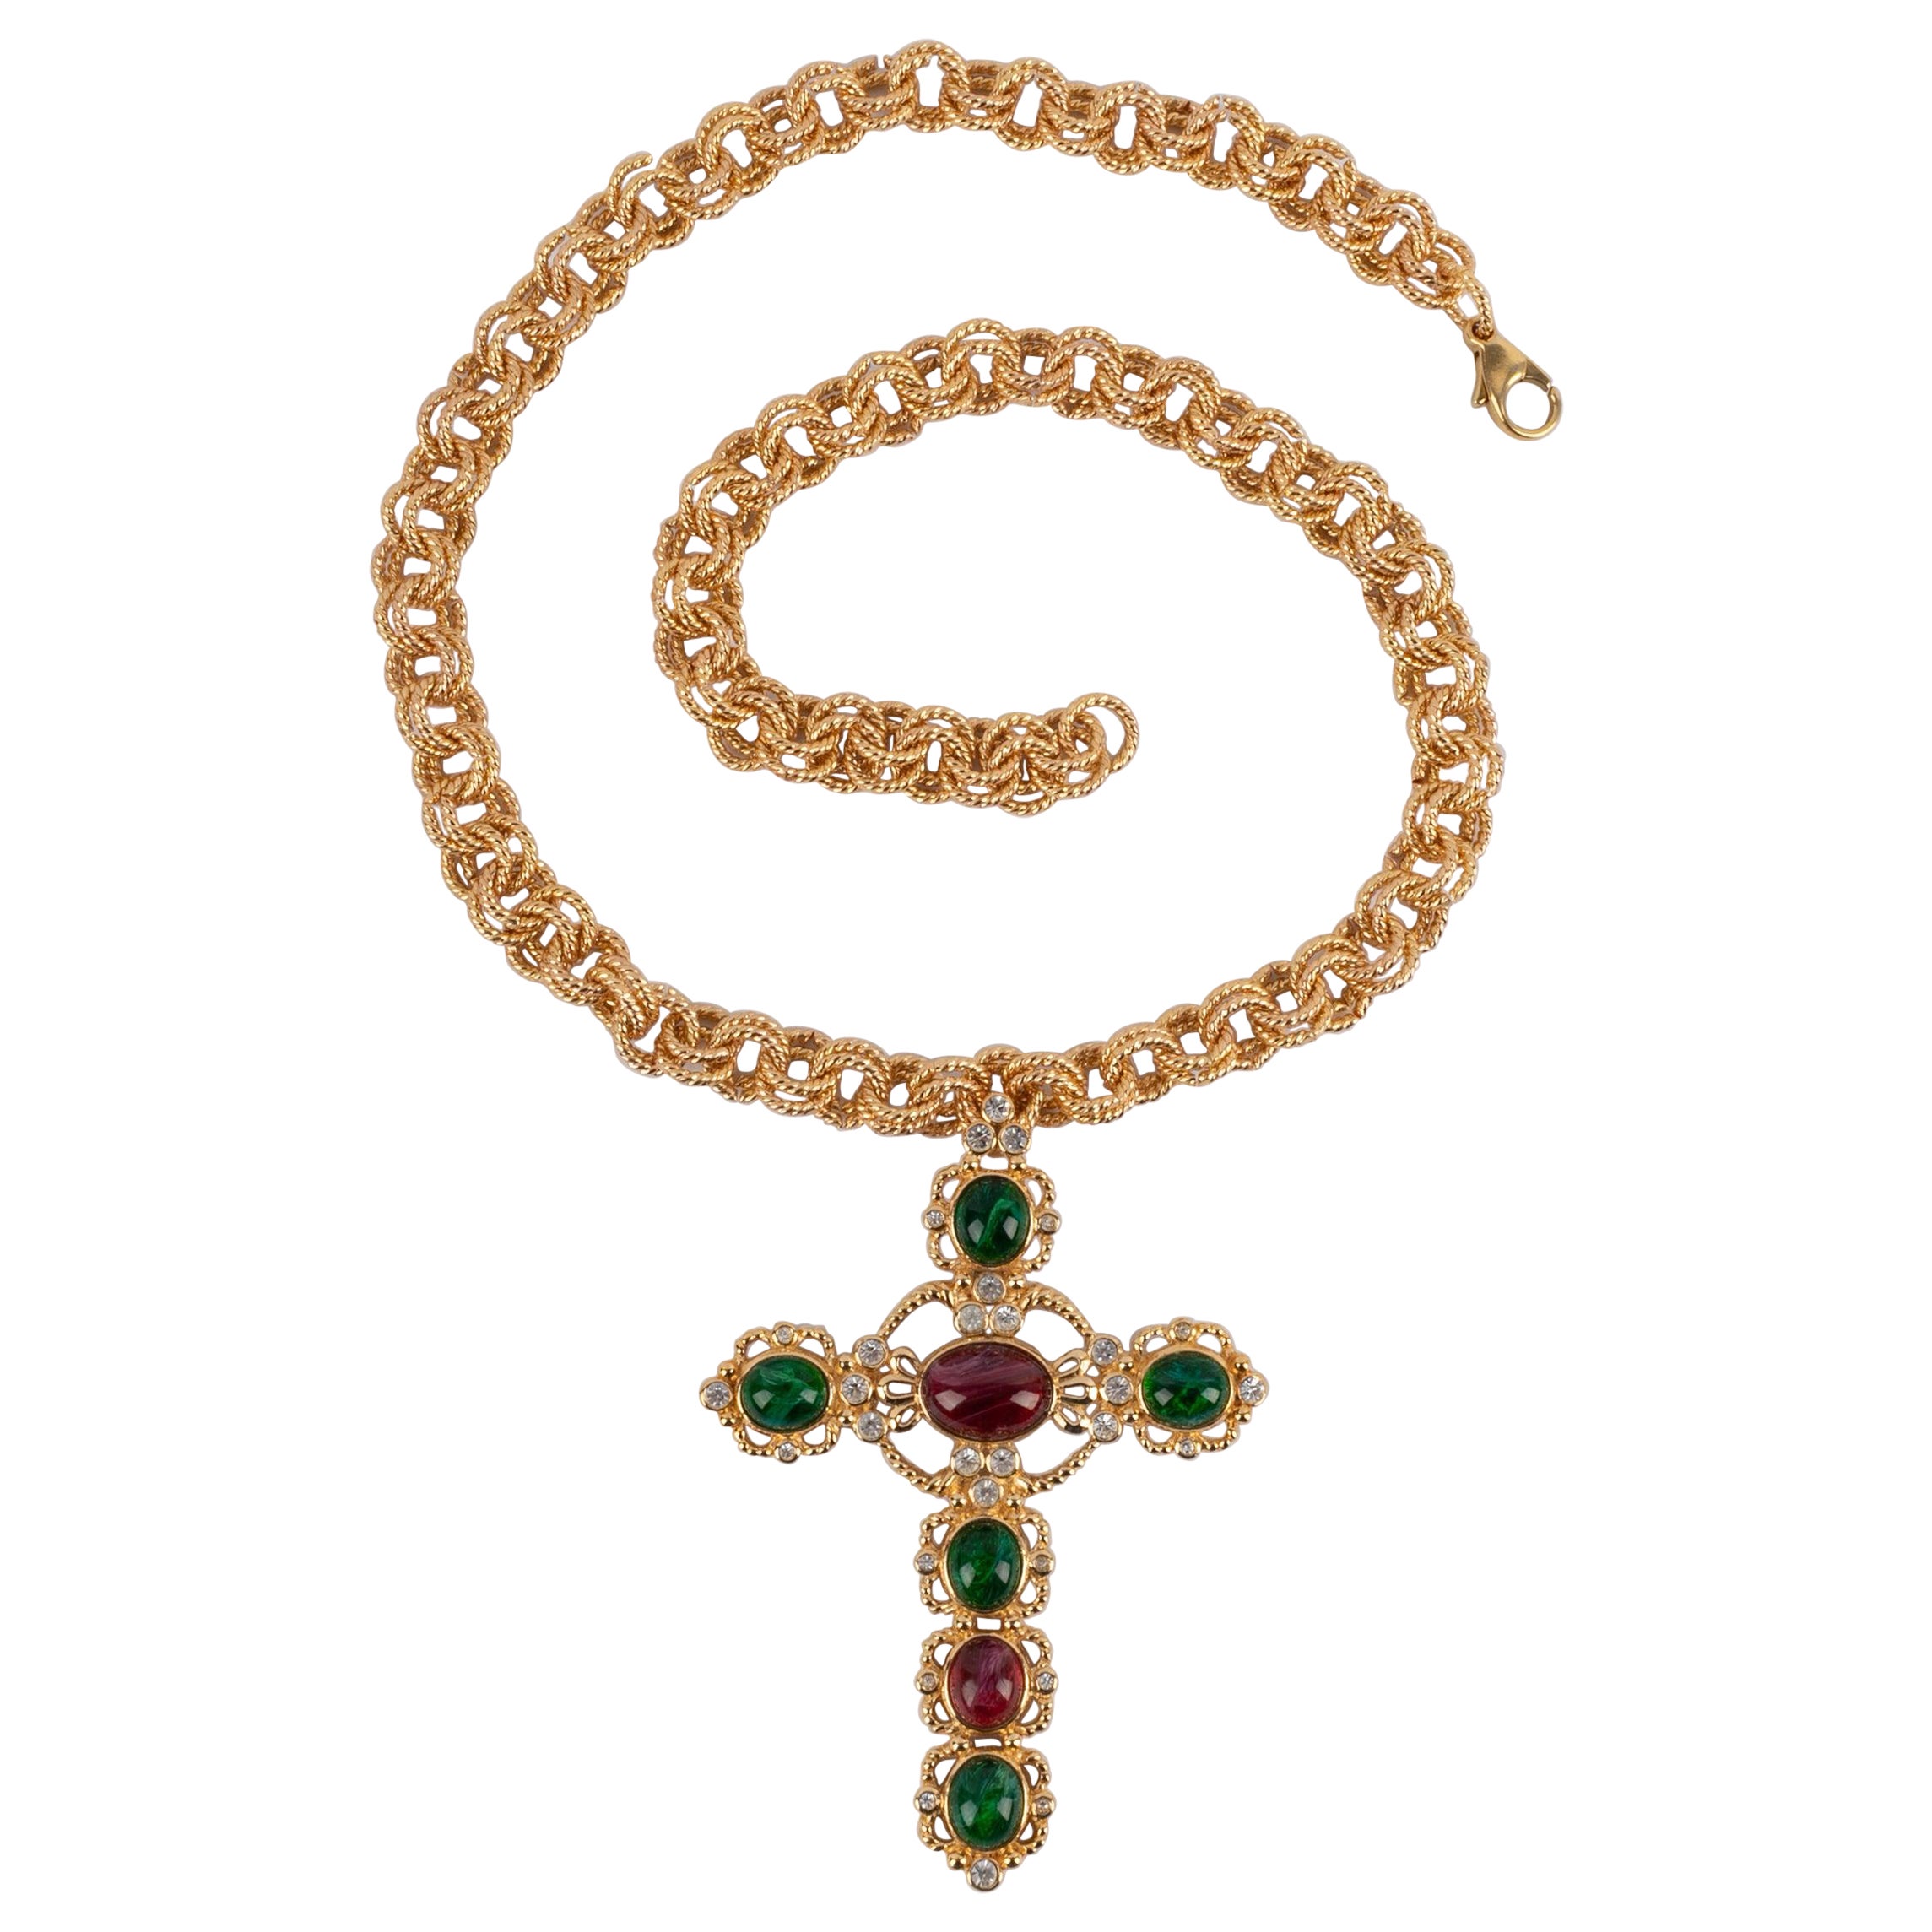 Christian Dior Golden Metal Cross Necklace